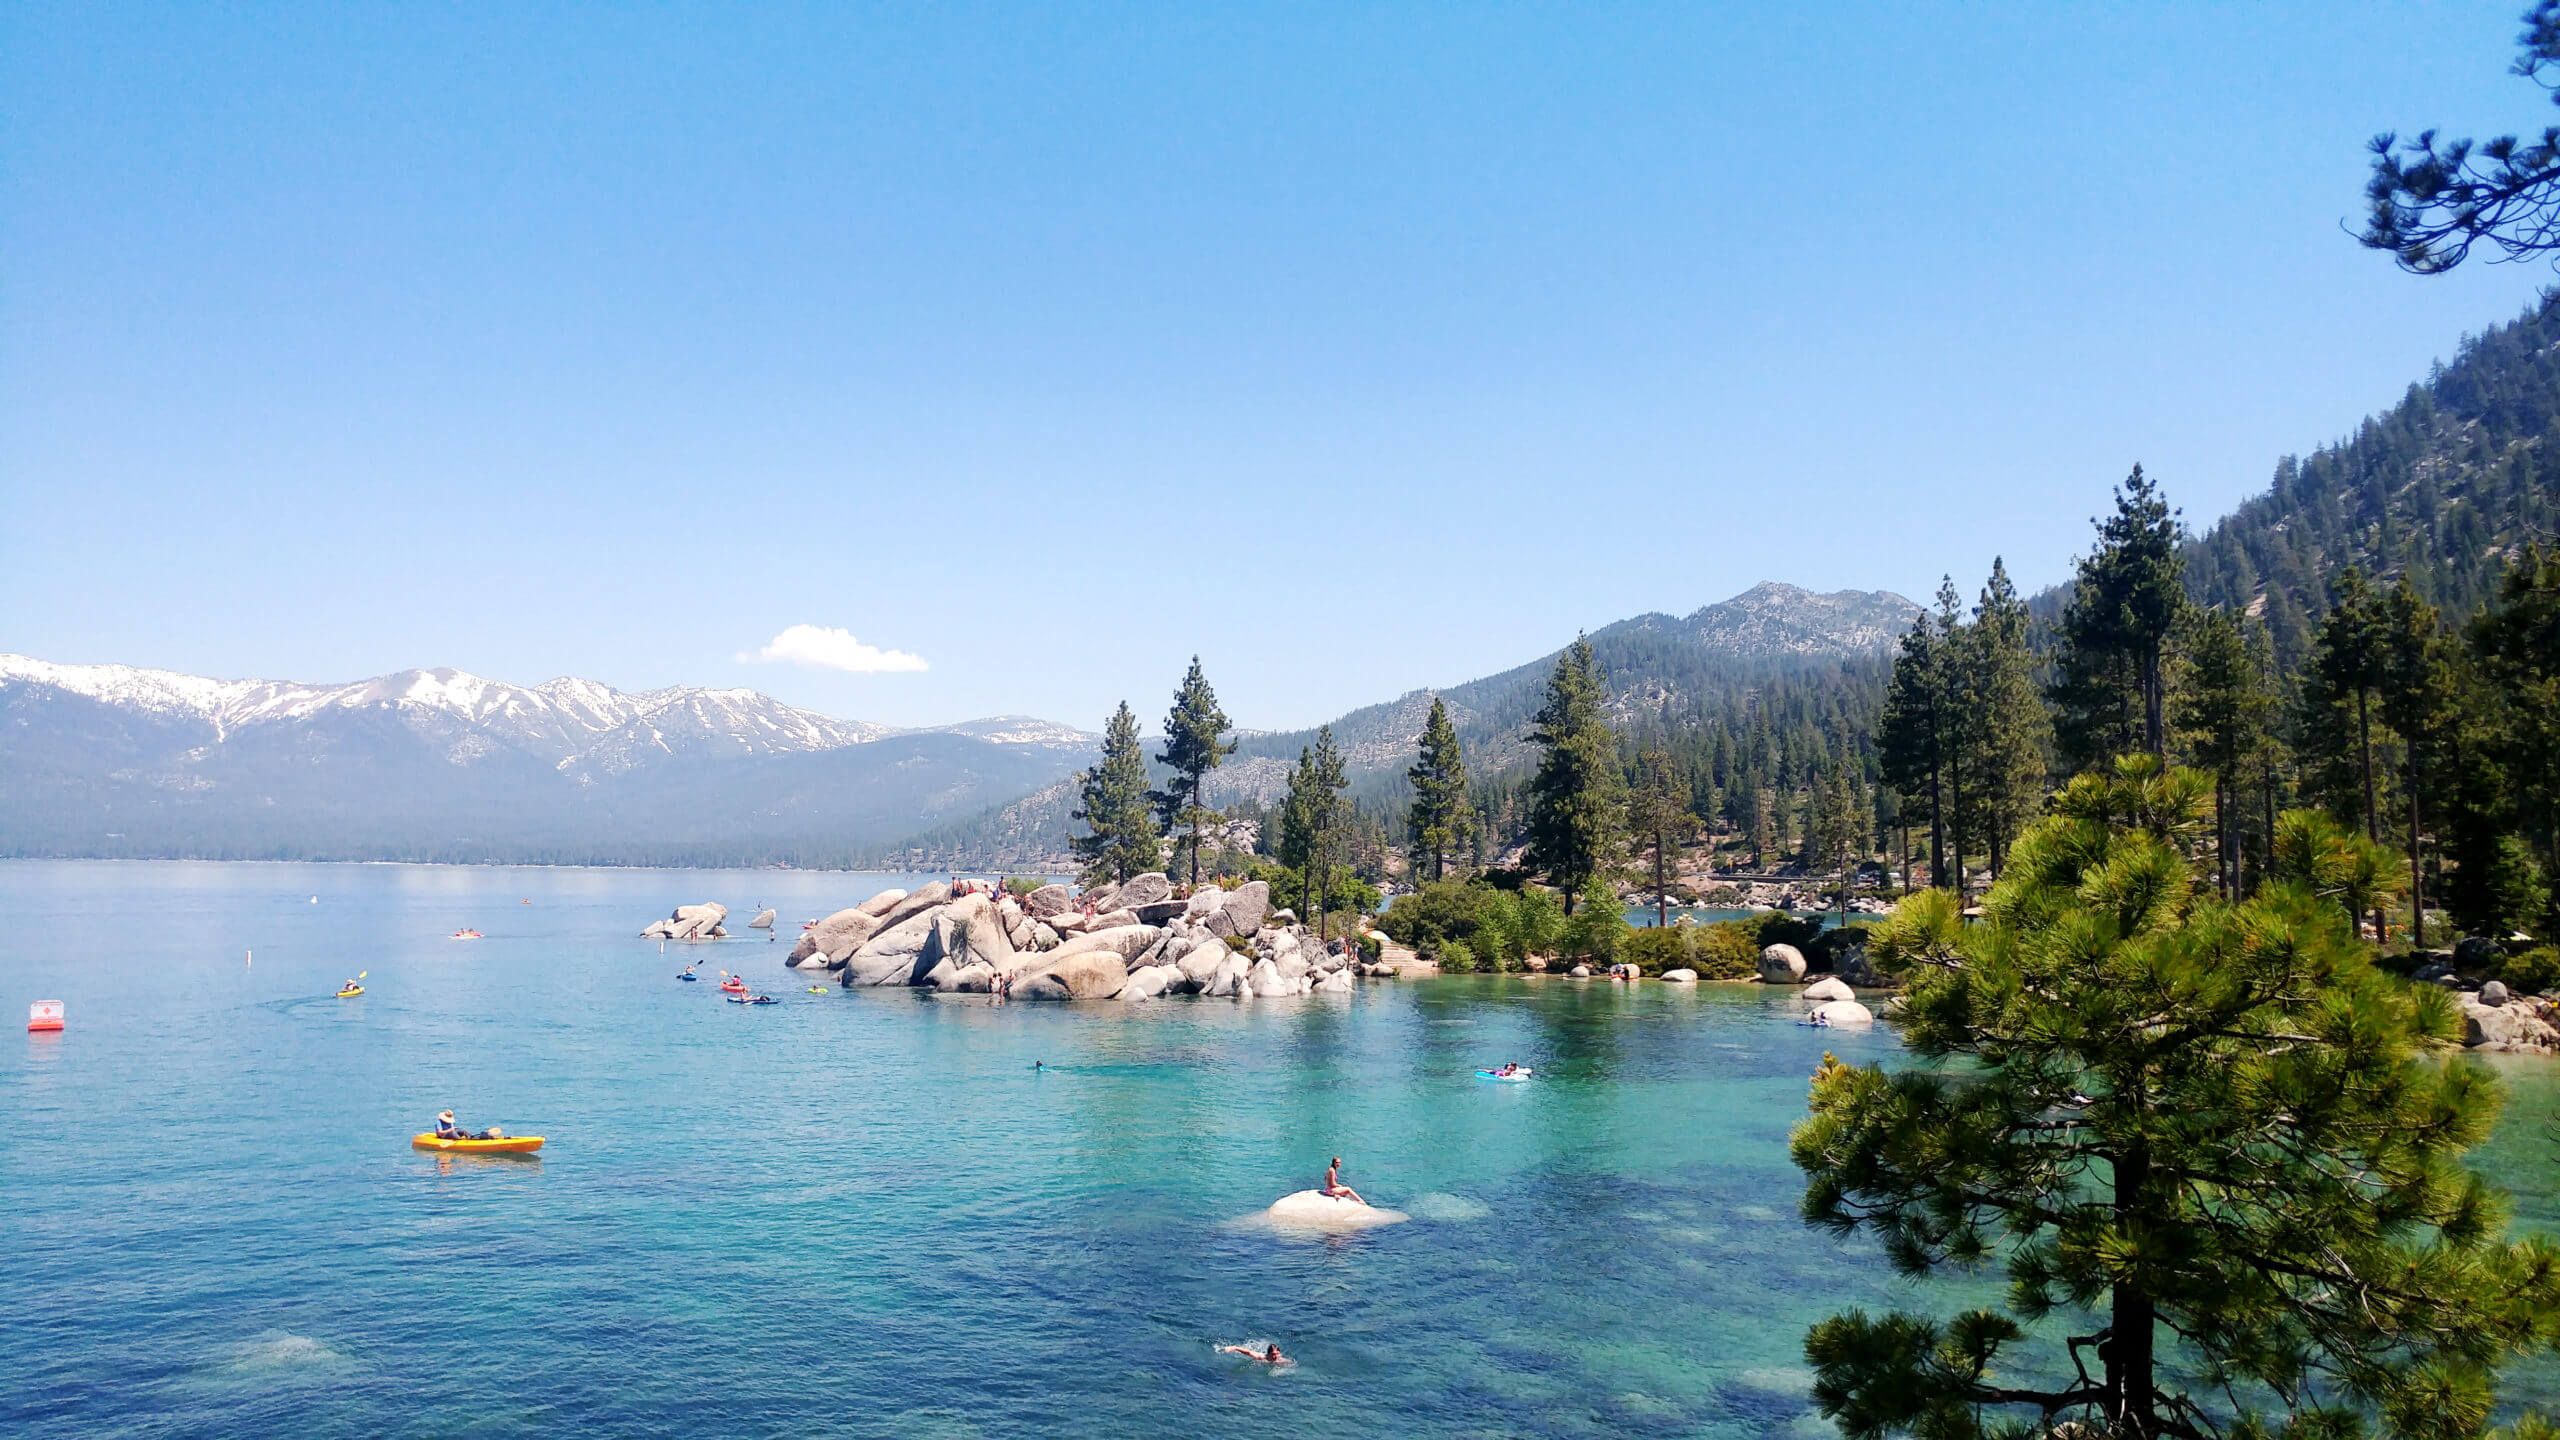 Lake Tahoe Nevada State Park. Where is Lake Tahoe